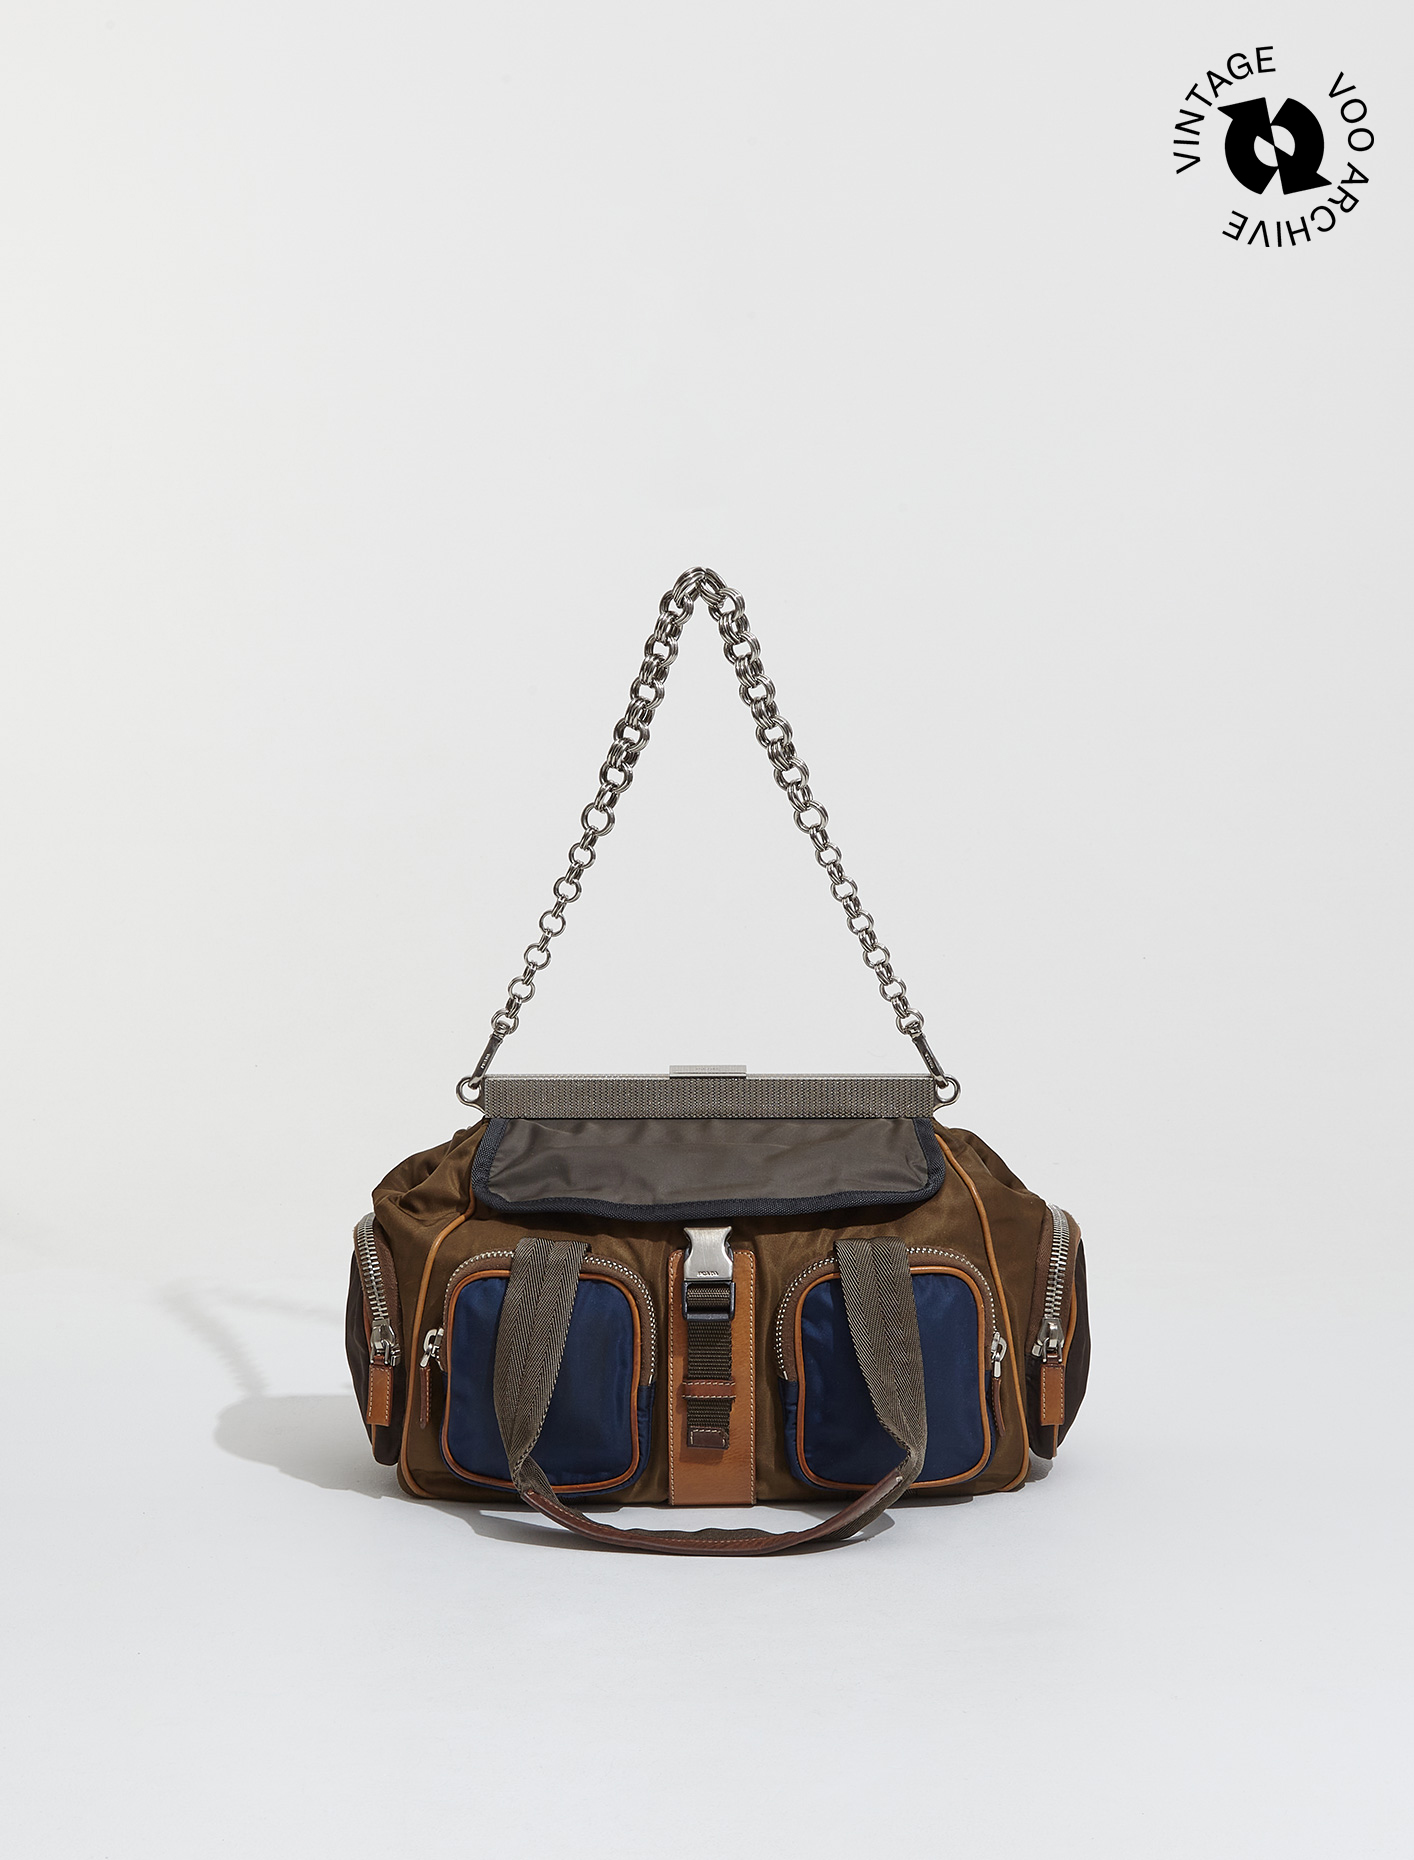 Prada Nylon Bag in Brown Multicolour | Voo Store Berlin | Worldwide Shipping